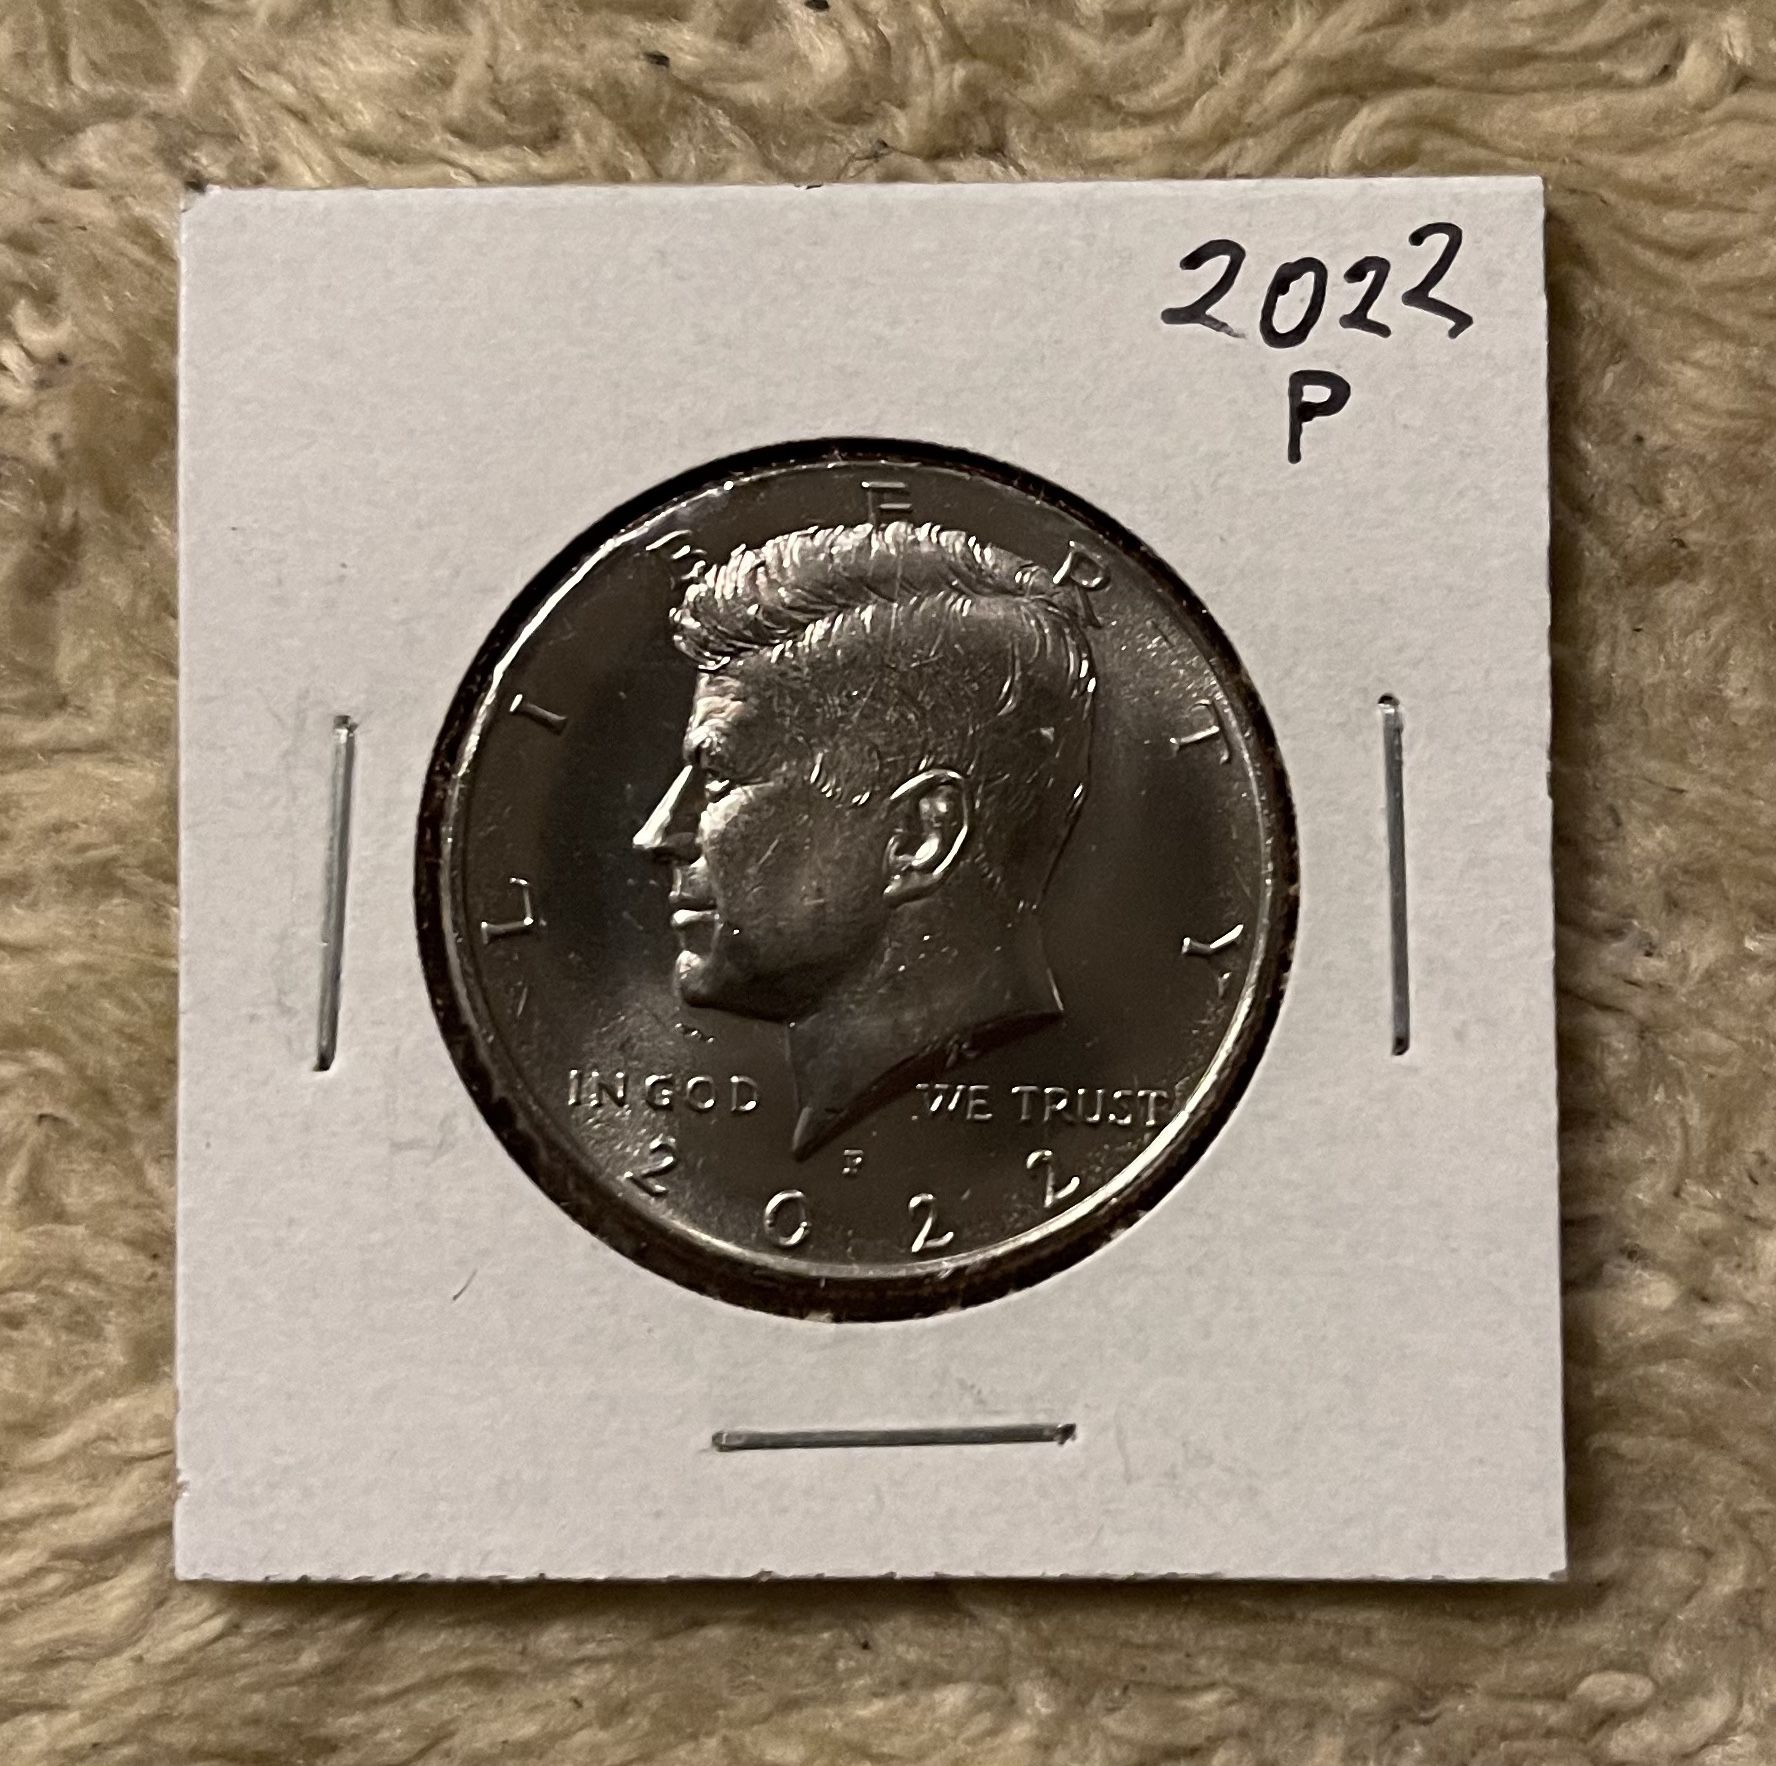 2022 P Mint Kennedy Half Dollars